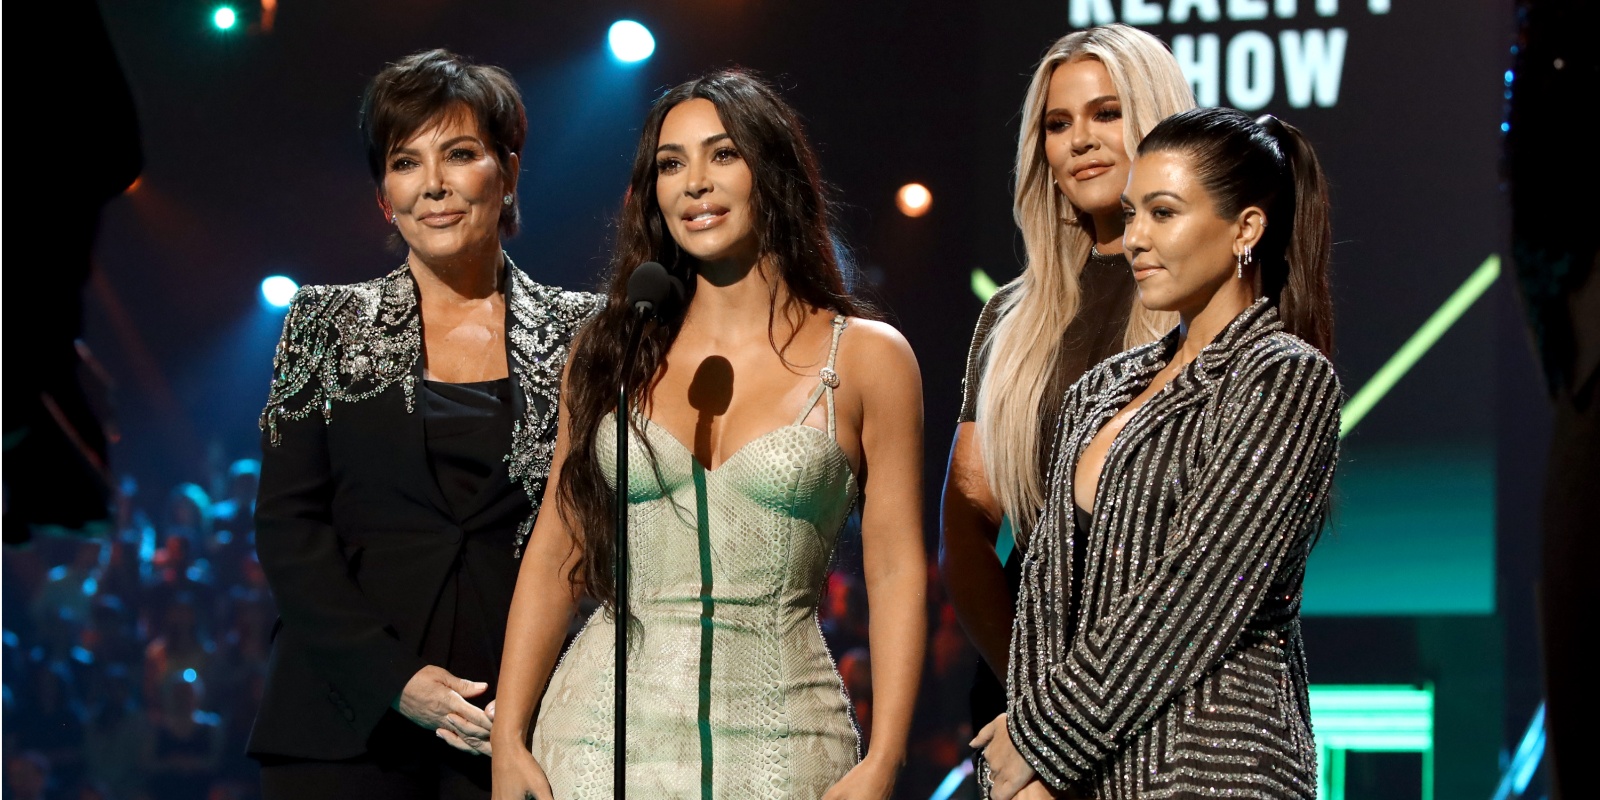 The Kardashians cast includes Kris Jenner, Kim Kardashian, Khloe Kardashian and Kourtney Kardashian.